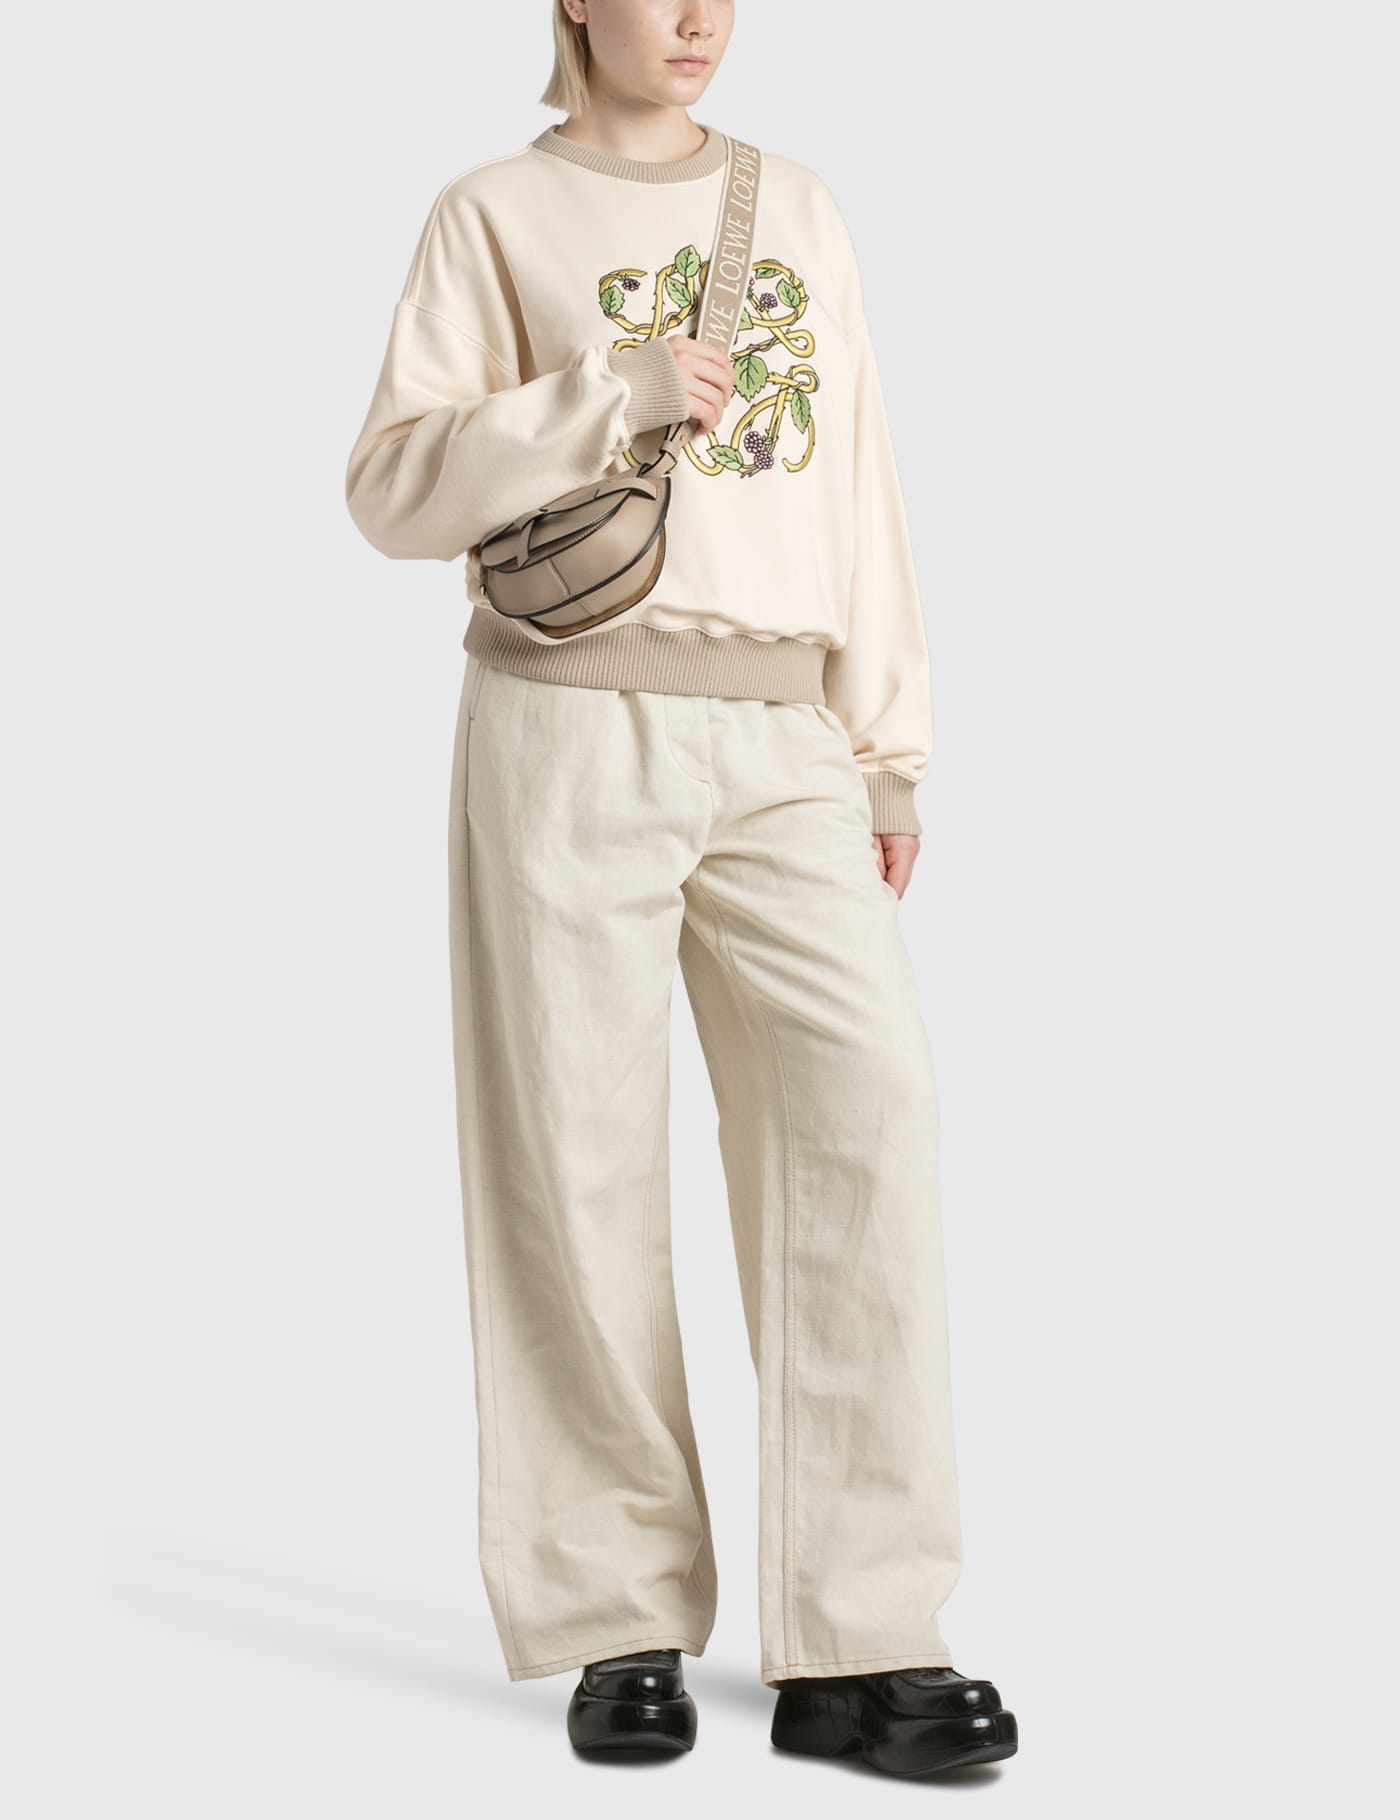 Loewe - Herbarium Anagram Sweatshirt | HBX - Globally Curated Fashion and  Lifestyle by Hypebeast